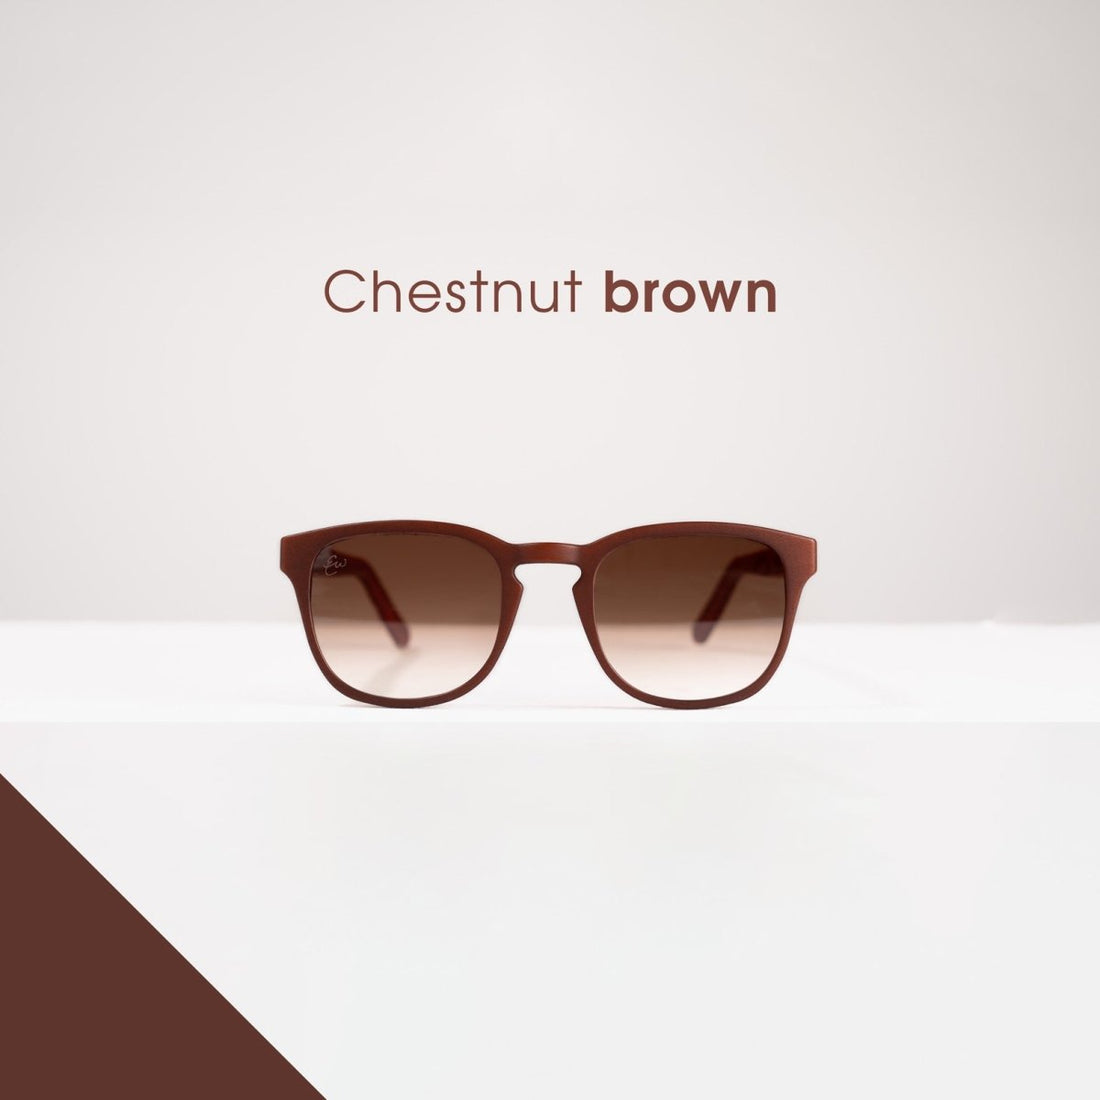 Cape Town - Chestnut brown - EveryWear Shop CAPE-TOWN-CB-M